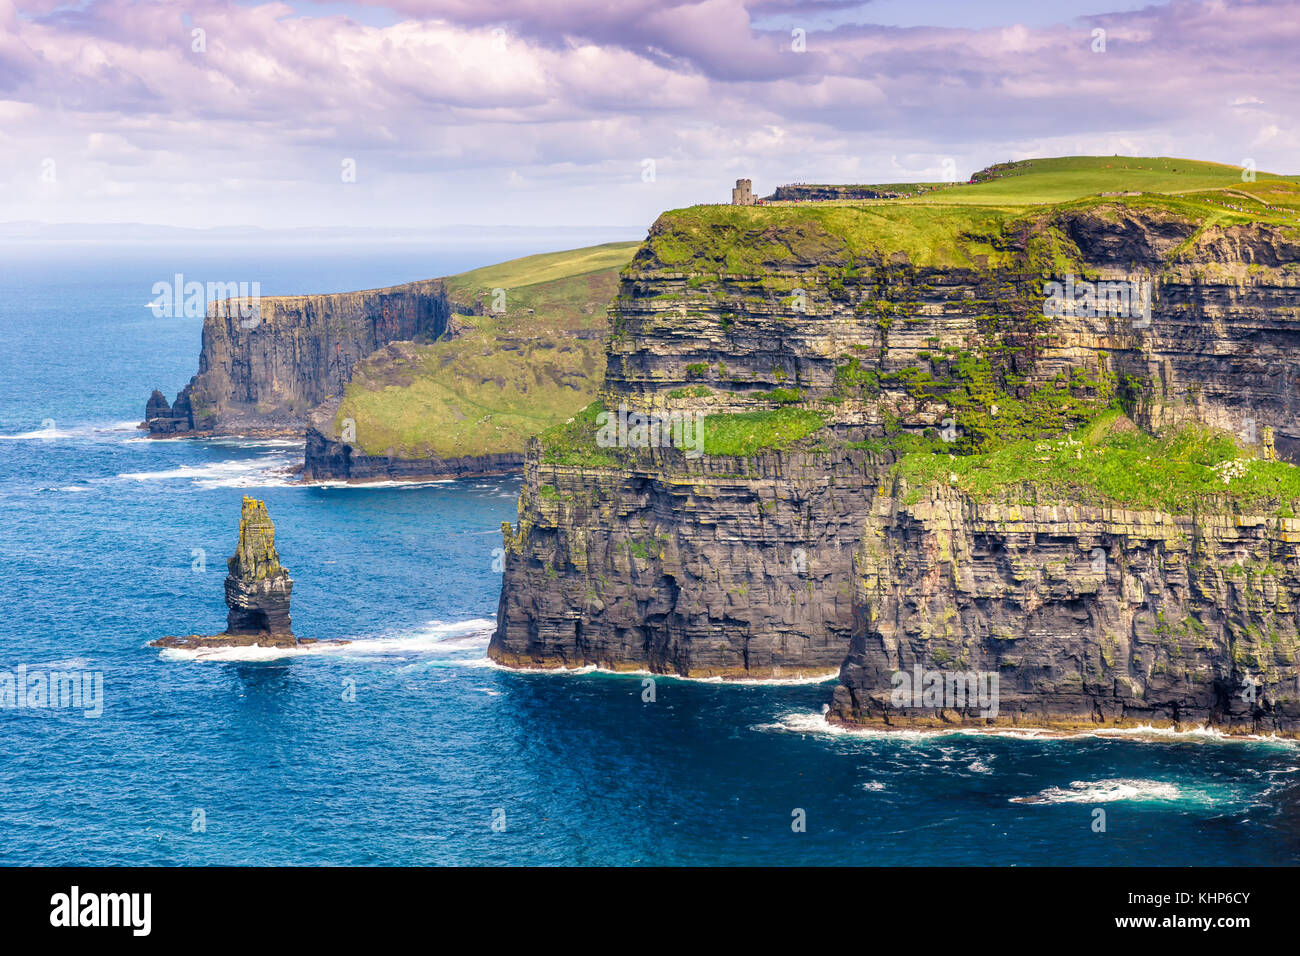 Die Klippen von Moher Irland reisen Reisen Meer Natur Meer Atlantik Stockfoto